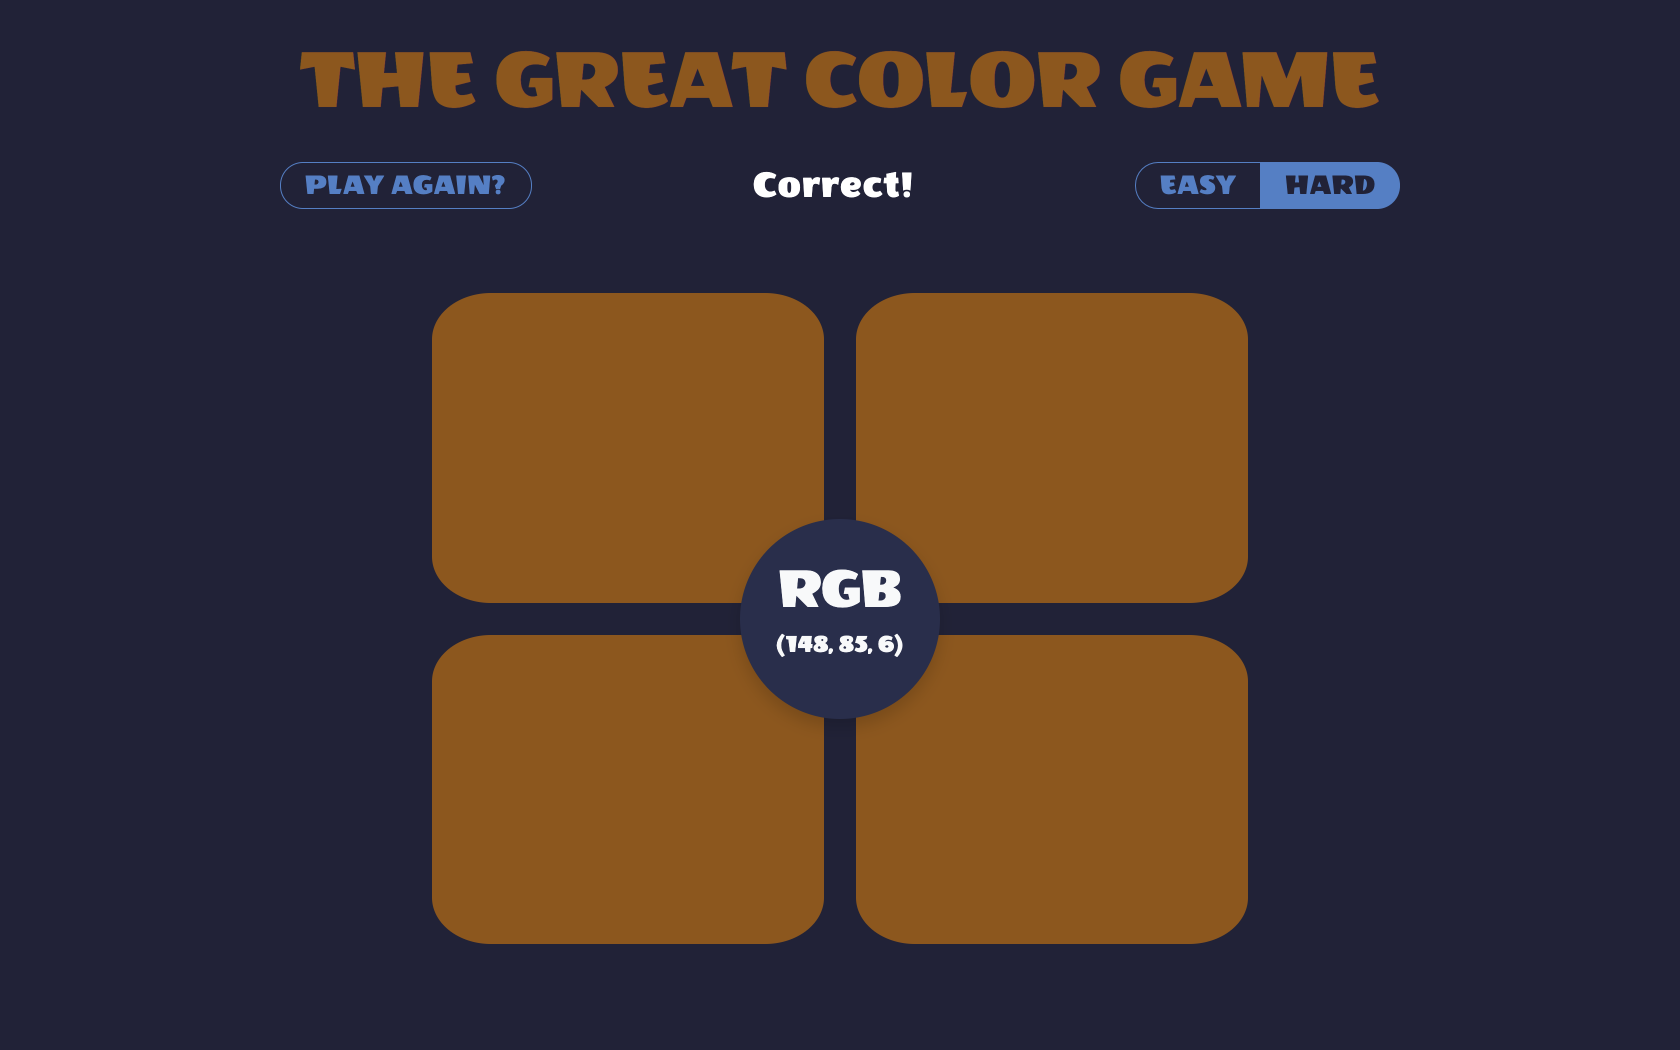 chose the correct color